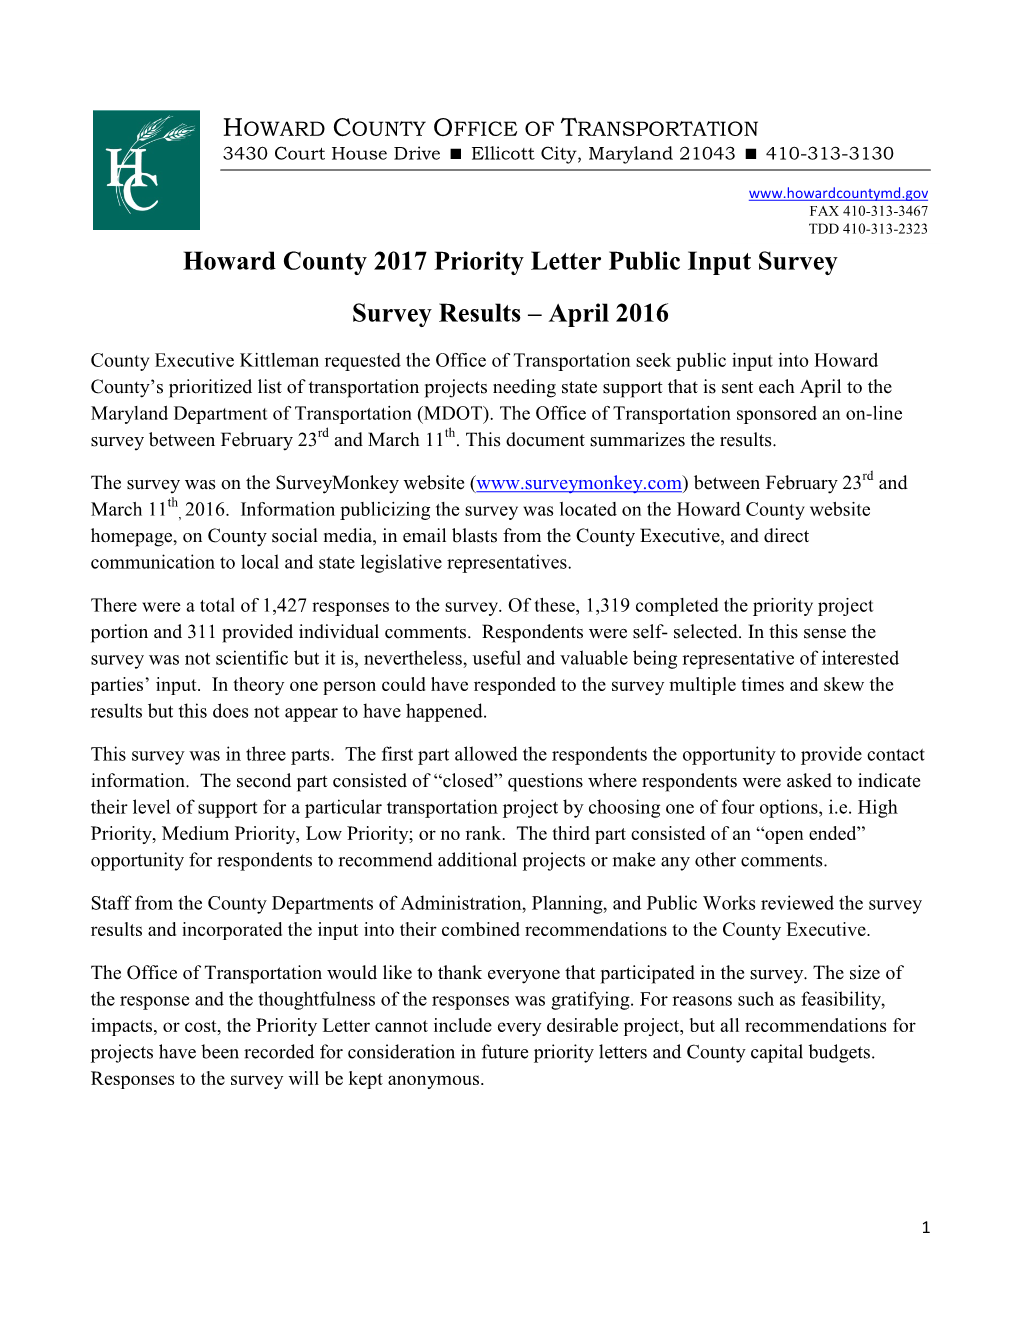 Howard County 2017 Priority Letter Public Input Survey Survey Results – April 2016